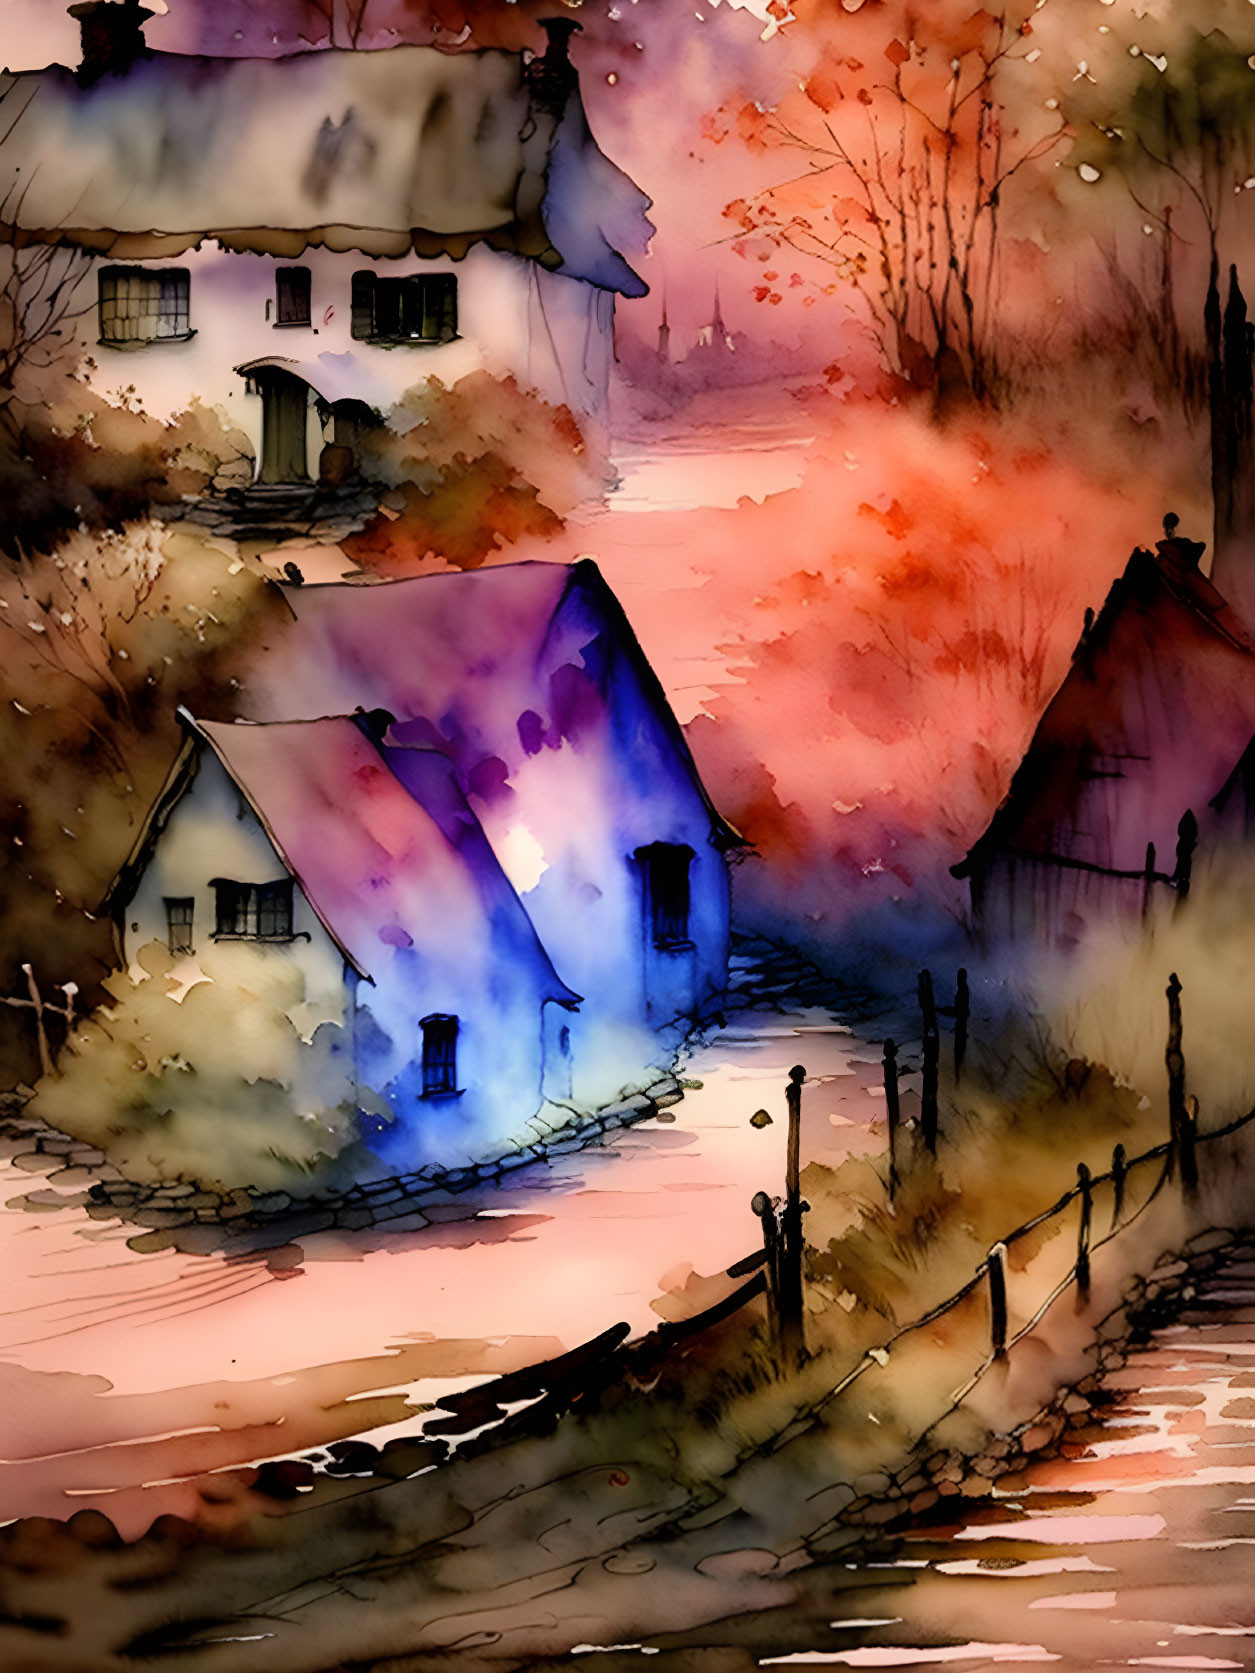 Colorful Watercolor Painting of Quaint Village